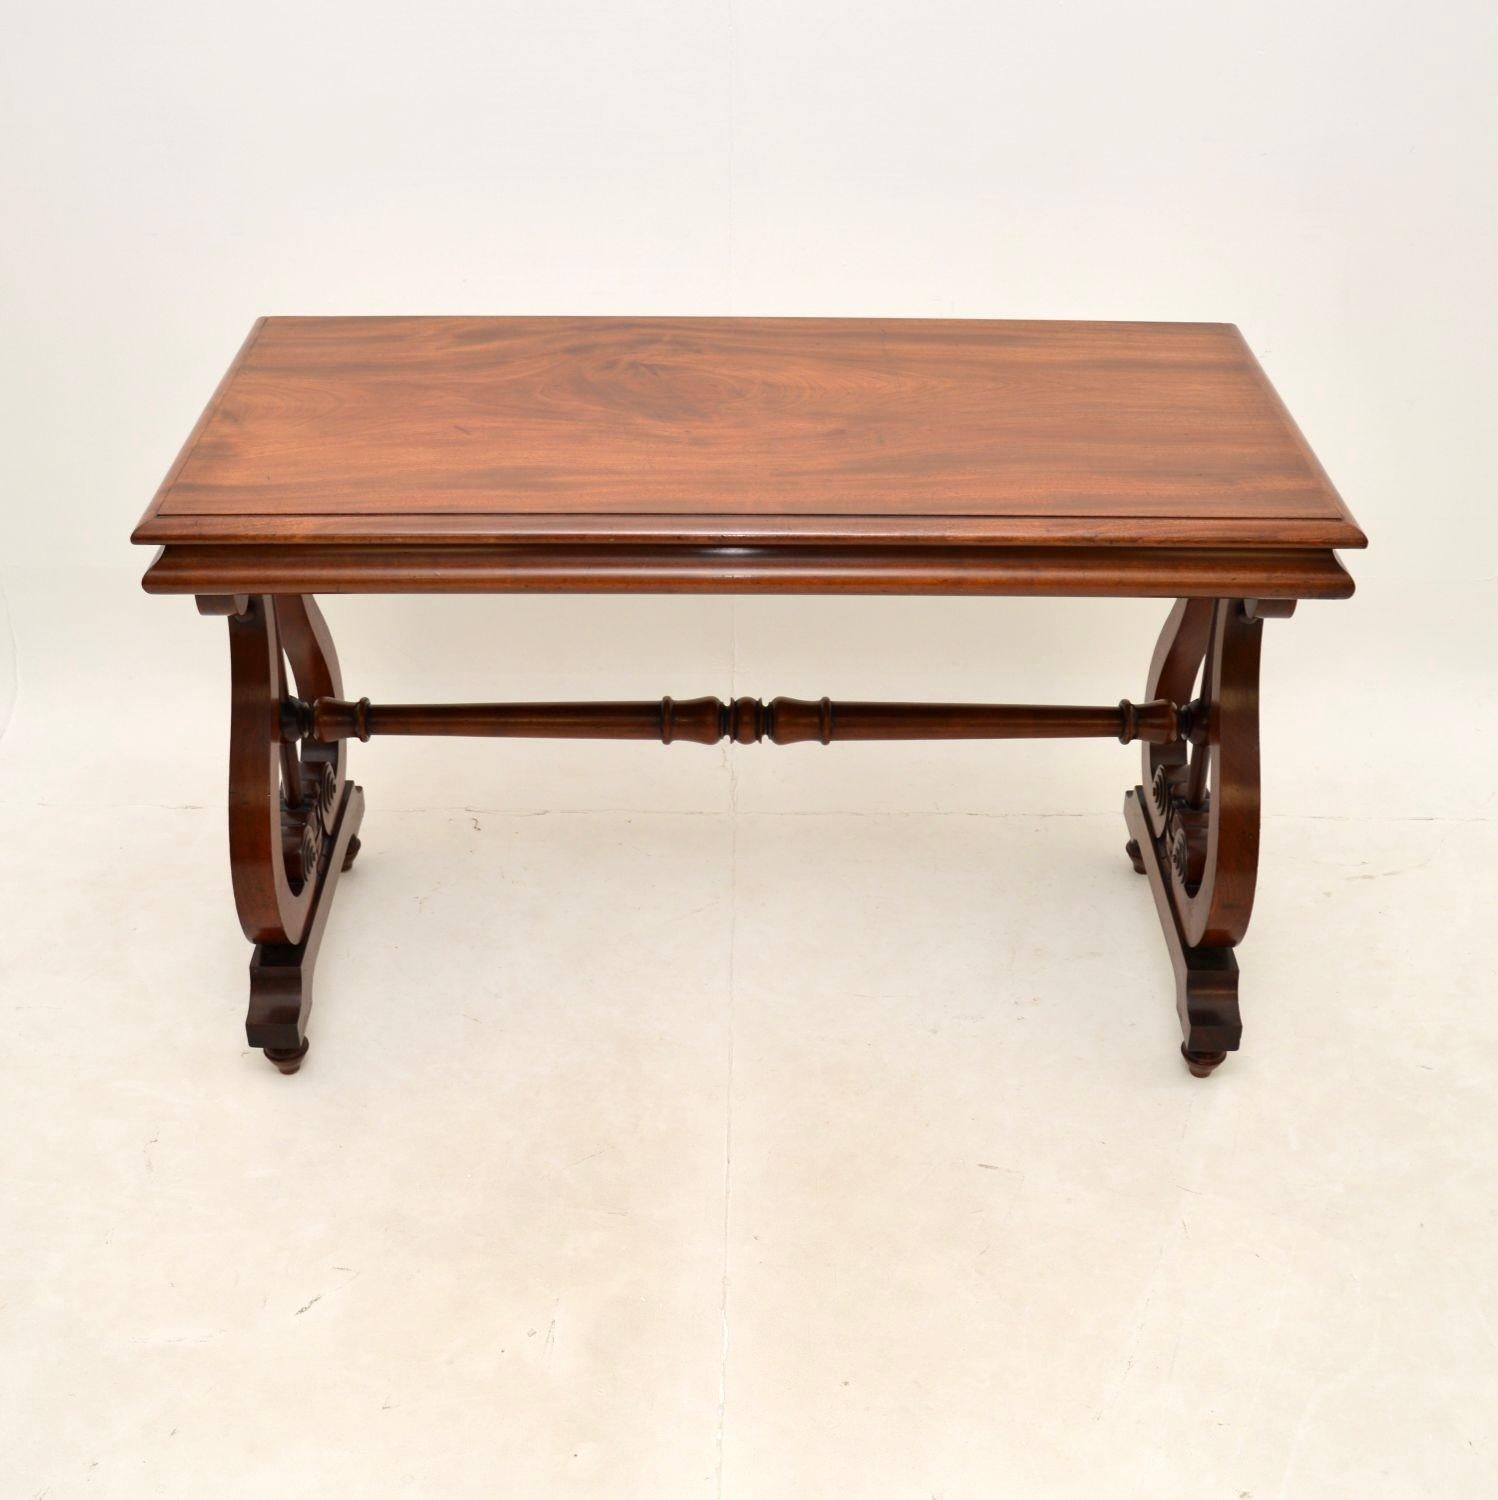 British Antique Regency Period Library Table / Desk